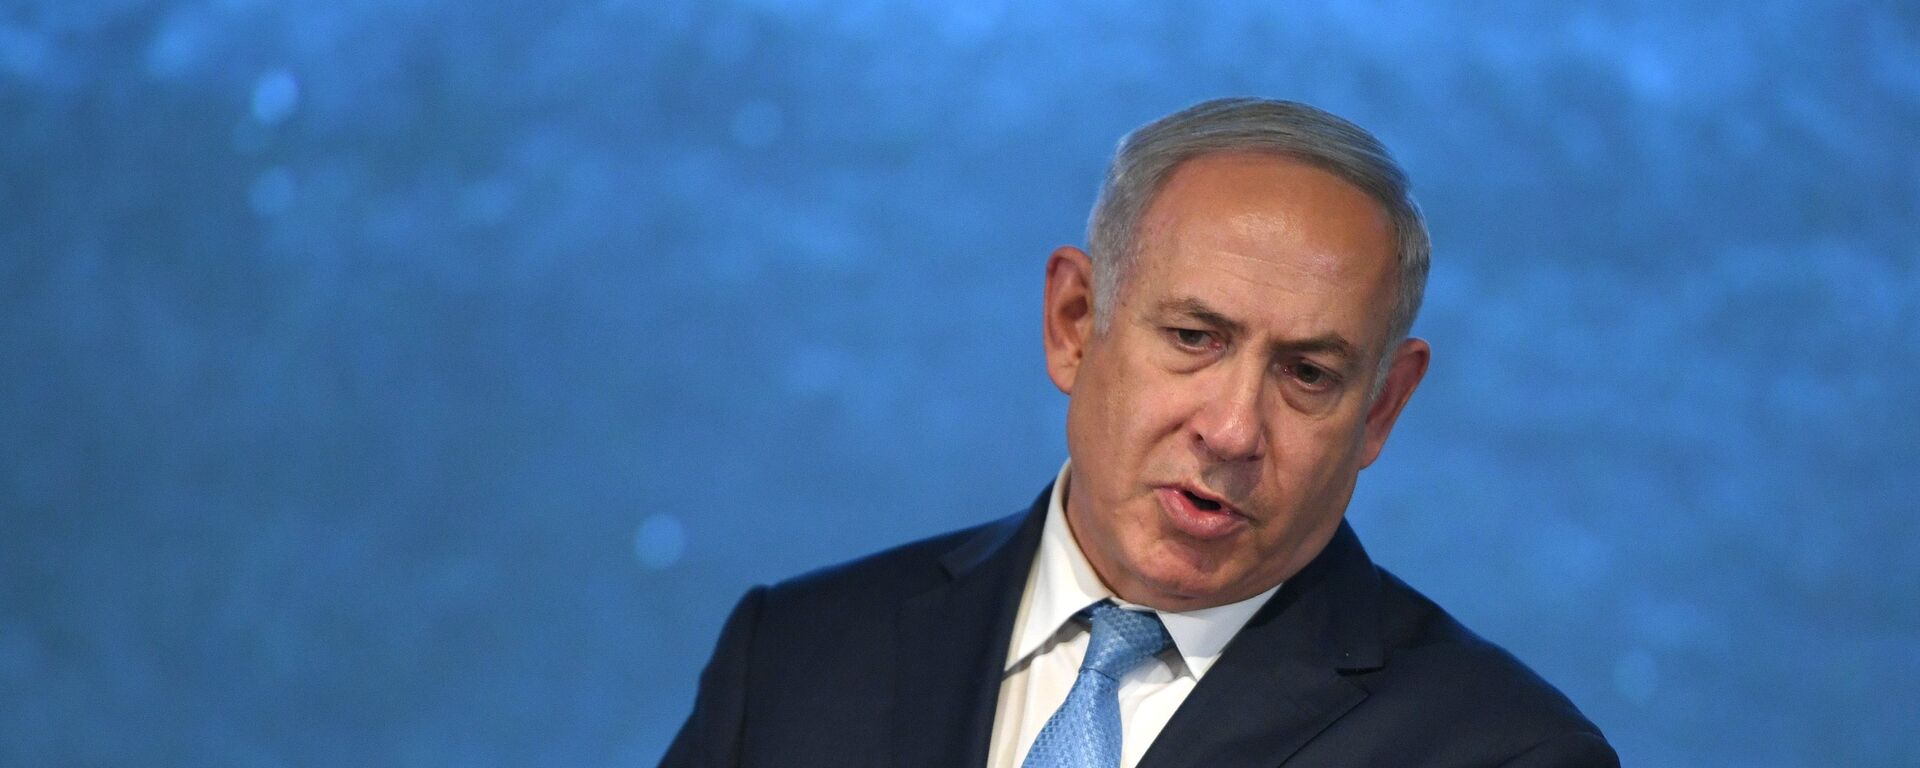 Benjamín Netanyahu, primer ministro de Israel - Sputnik Mundo, 1920, 02.05.2021